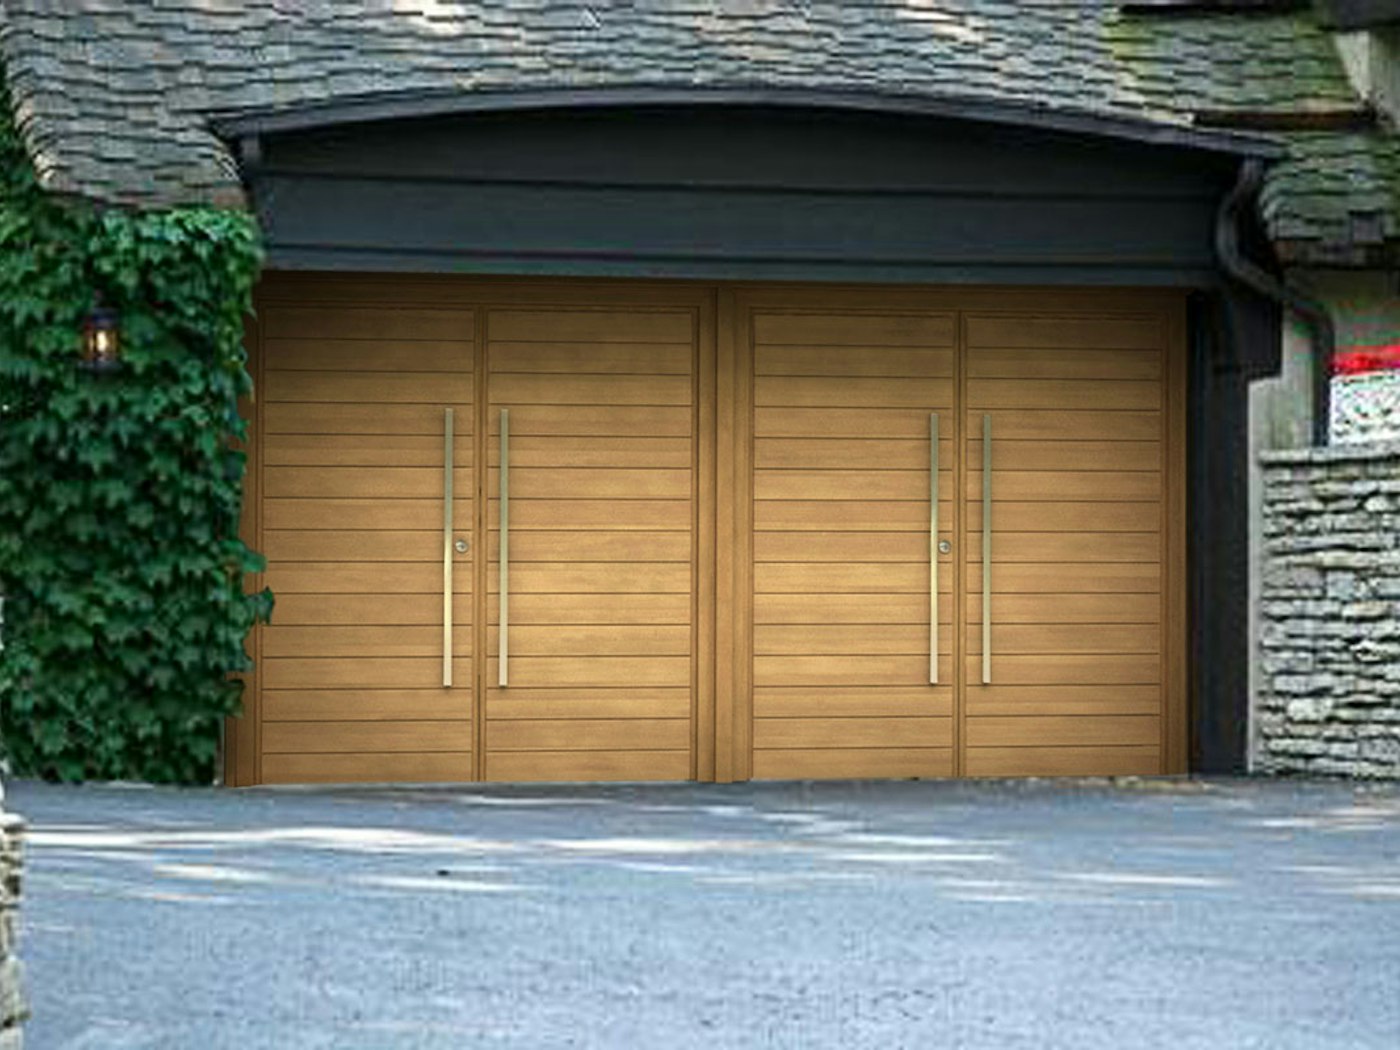 Double side hinged garage doors | Parma design